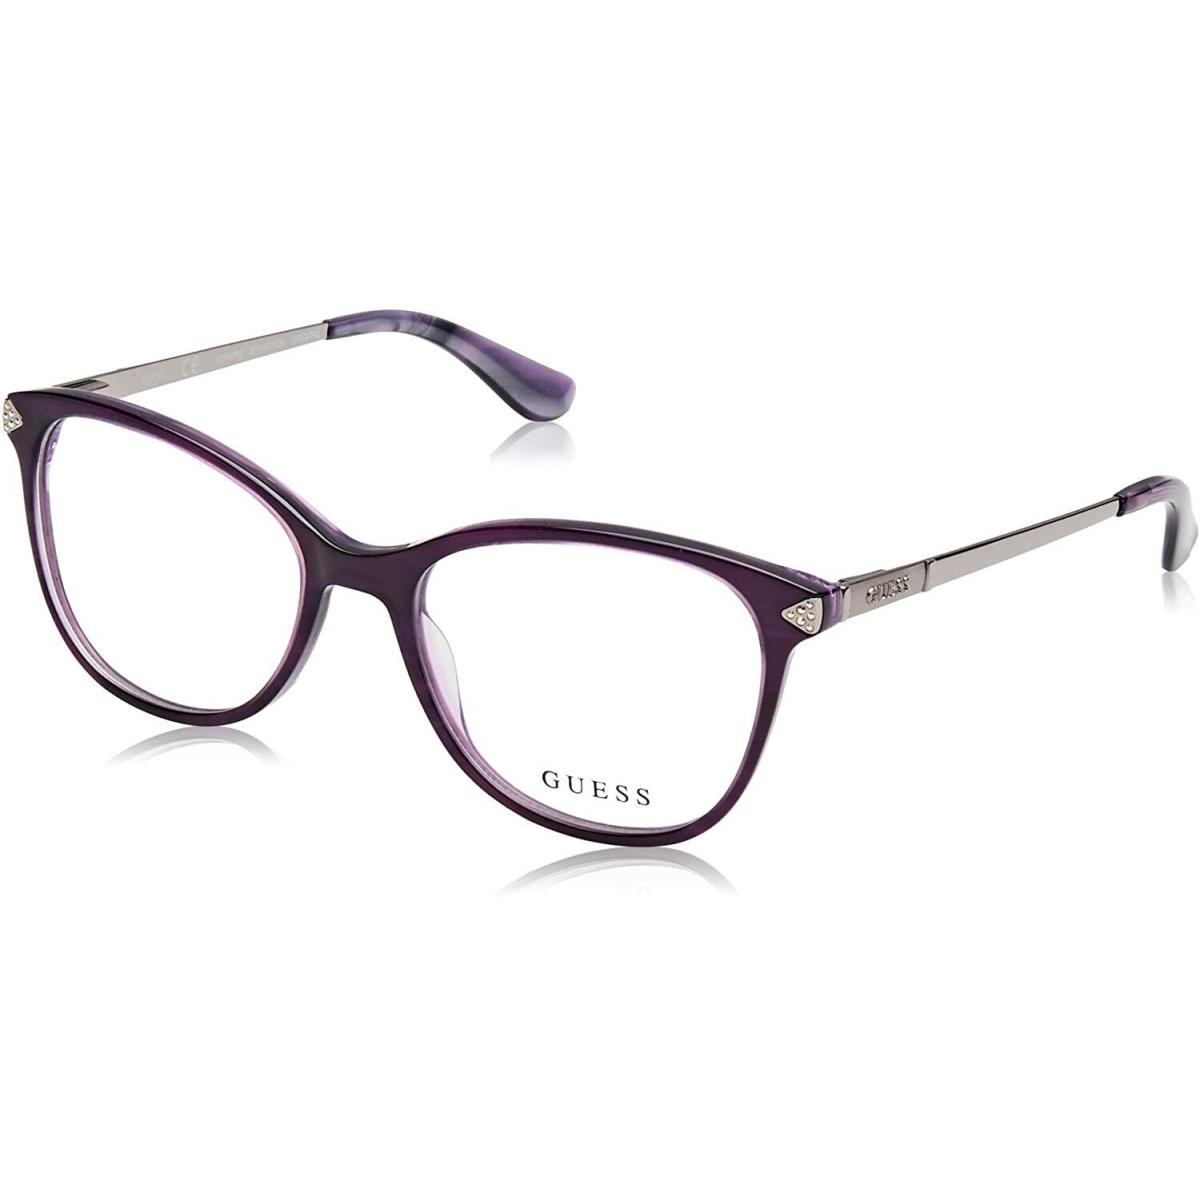 Guess GU2632-S Purple 081 Plastic Cat Eye Optical Eyeglasses Frame 52-17-135 AB - Purple , Purple Frame, Clear Lens